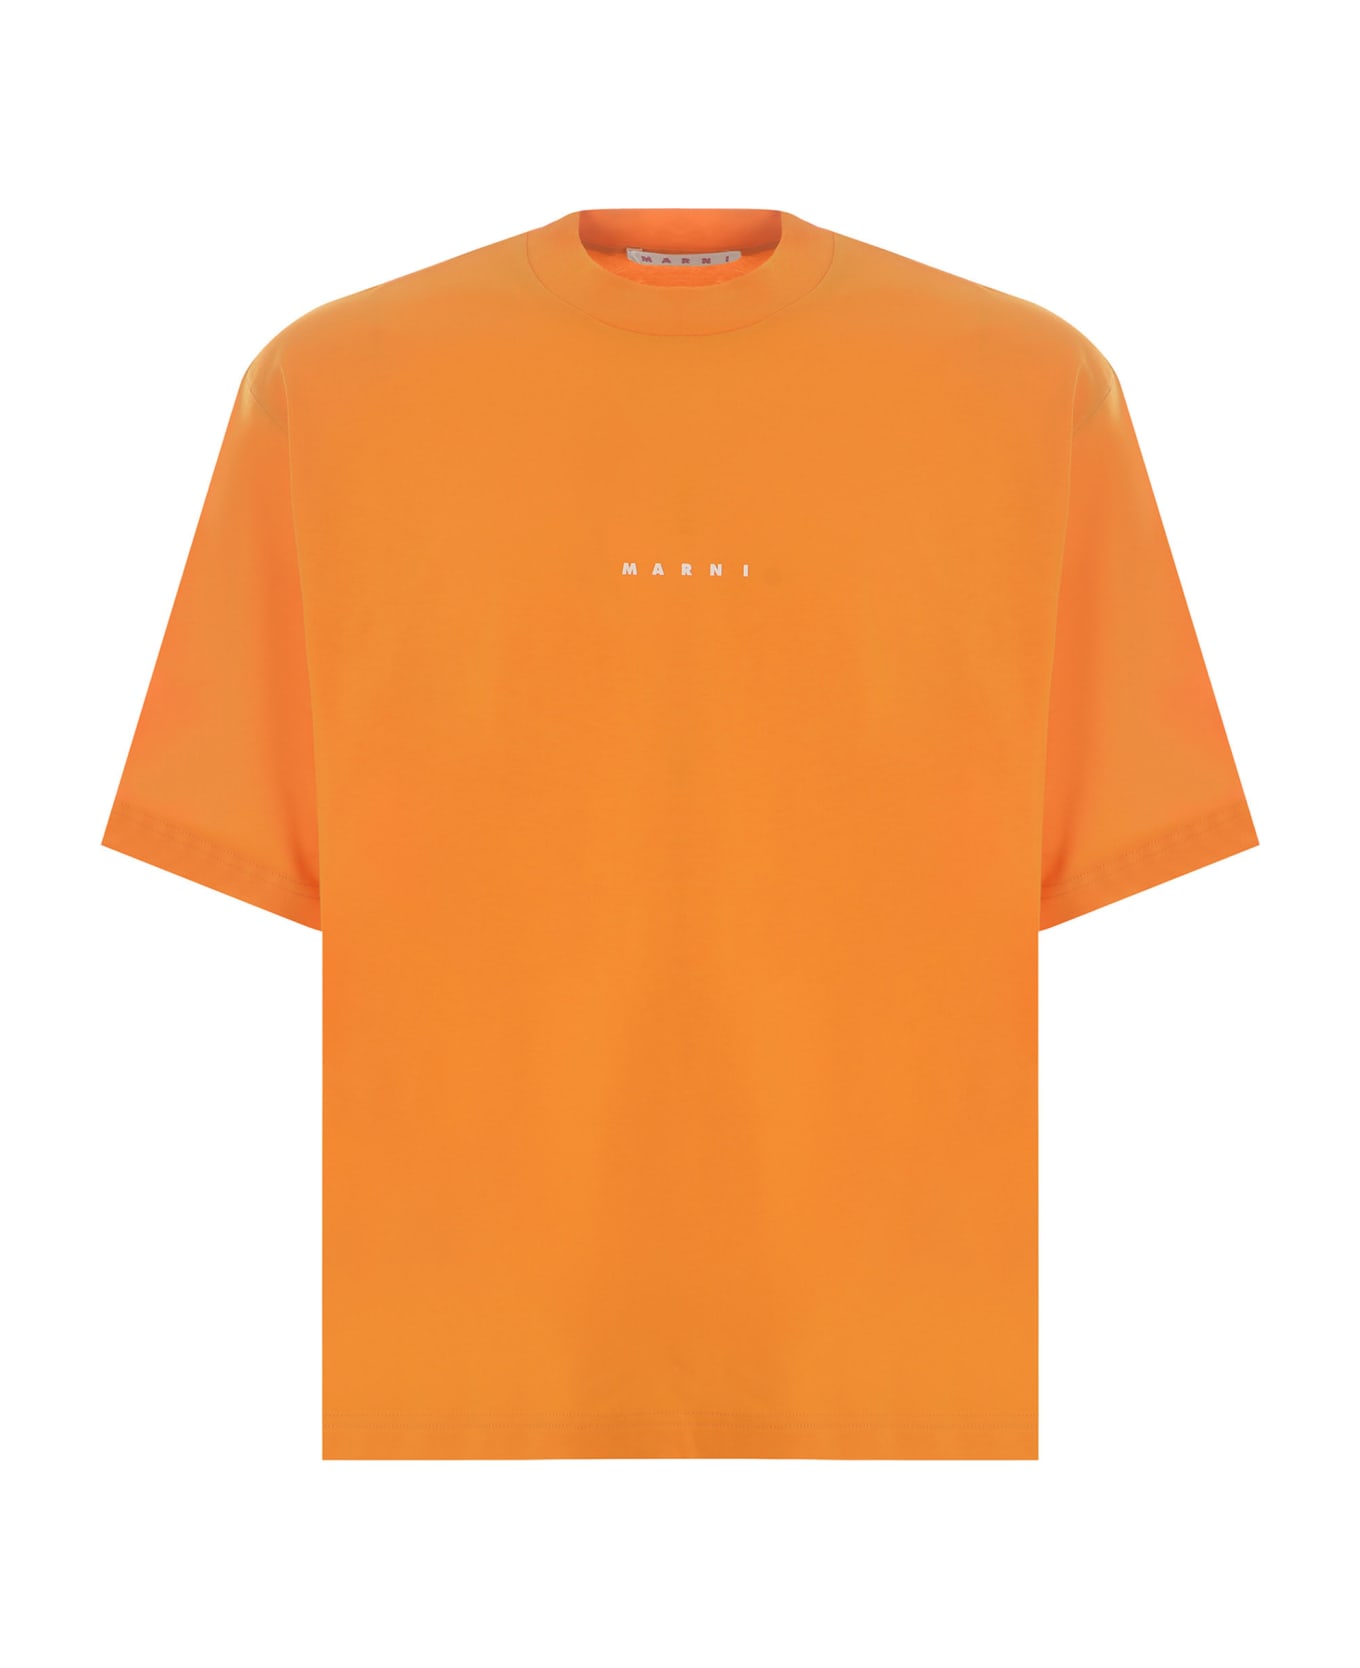 Marni T-shirt Marni Made Of Cotton - Light orange